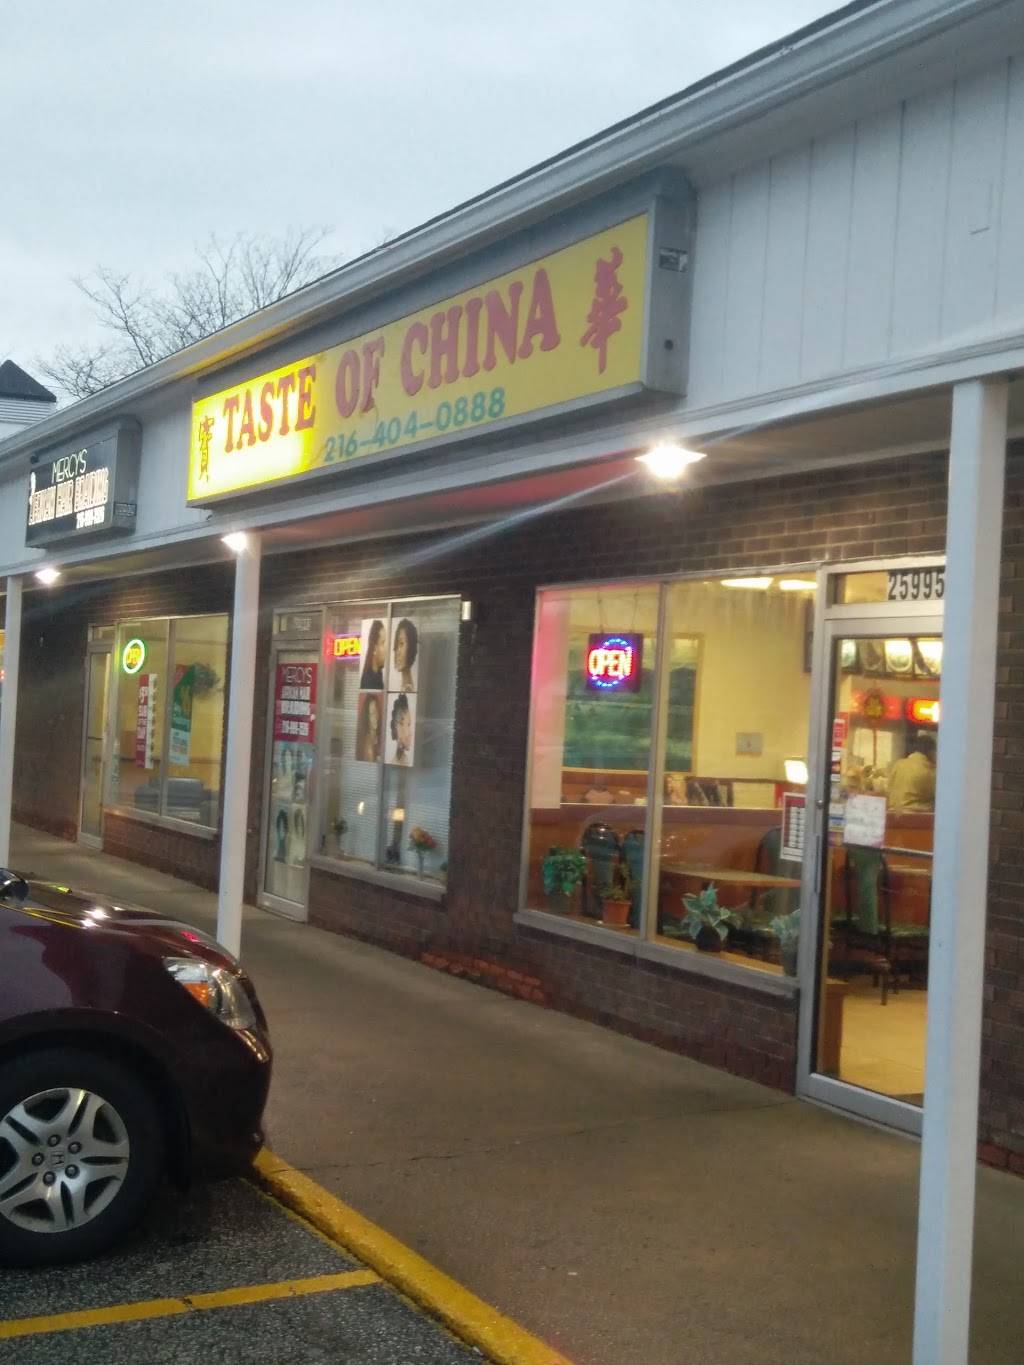 Taste of China | 2701, 25995 Highland Rd, Cleveland, OH 44143, USA | Phone: (216) 404-0888